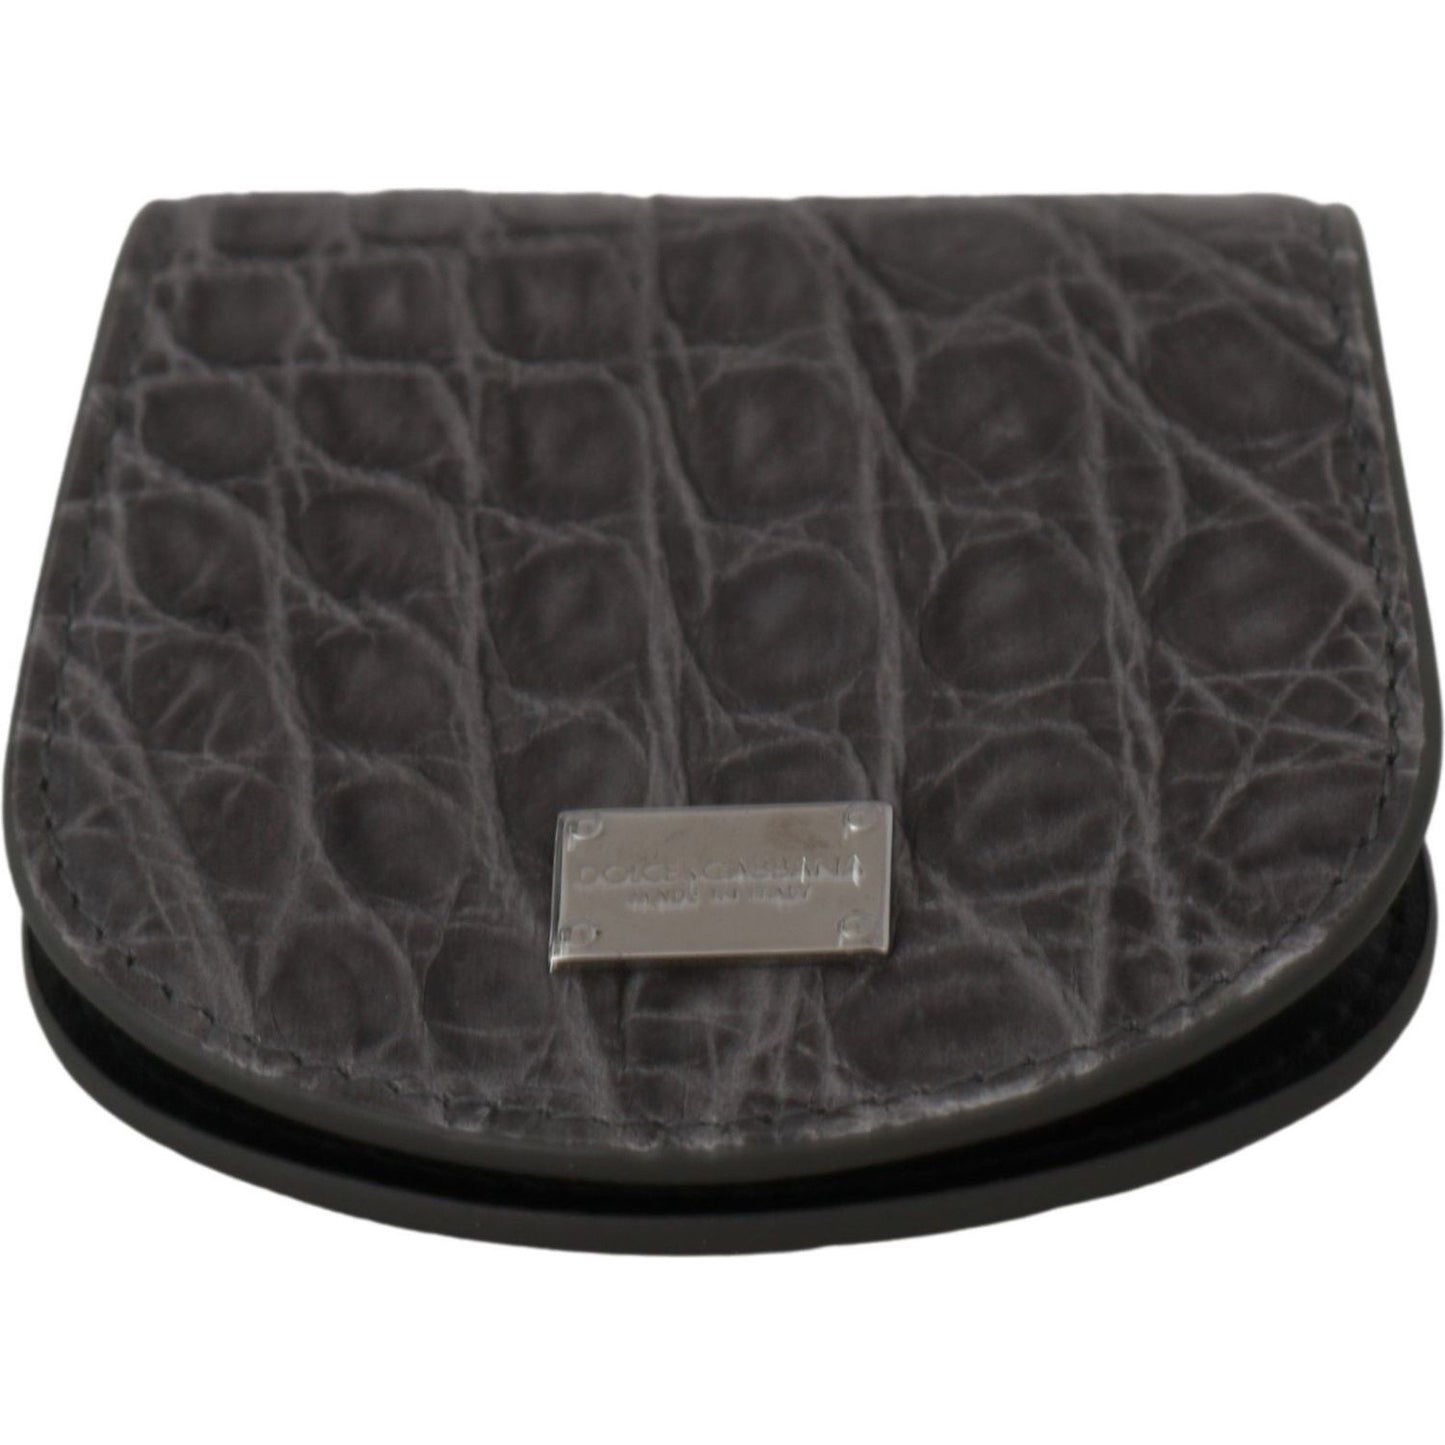 Dolce & Gabbana Exotic Gray Leather Condom Case Wallet gray-exotic-skin-condom-case-holder-pocket-wallet Condom Case IMG_0241-d418def8-45c.jpg